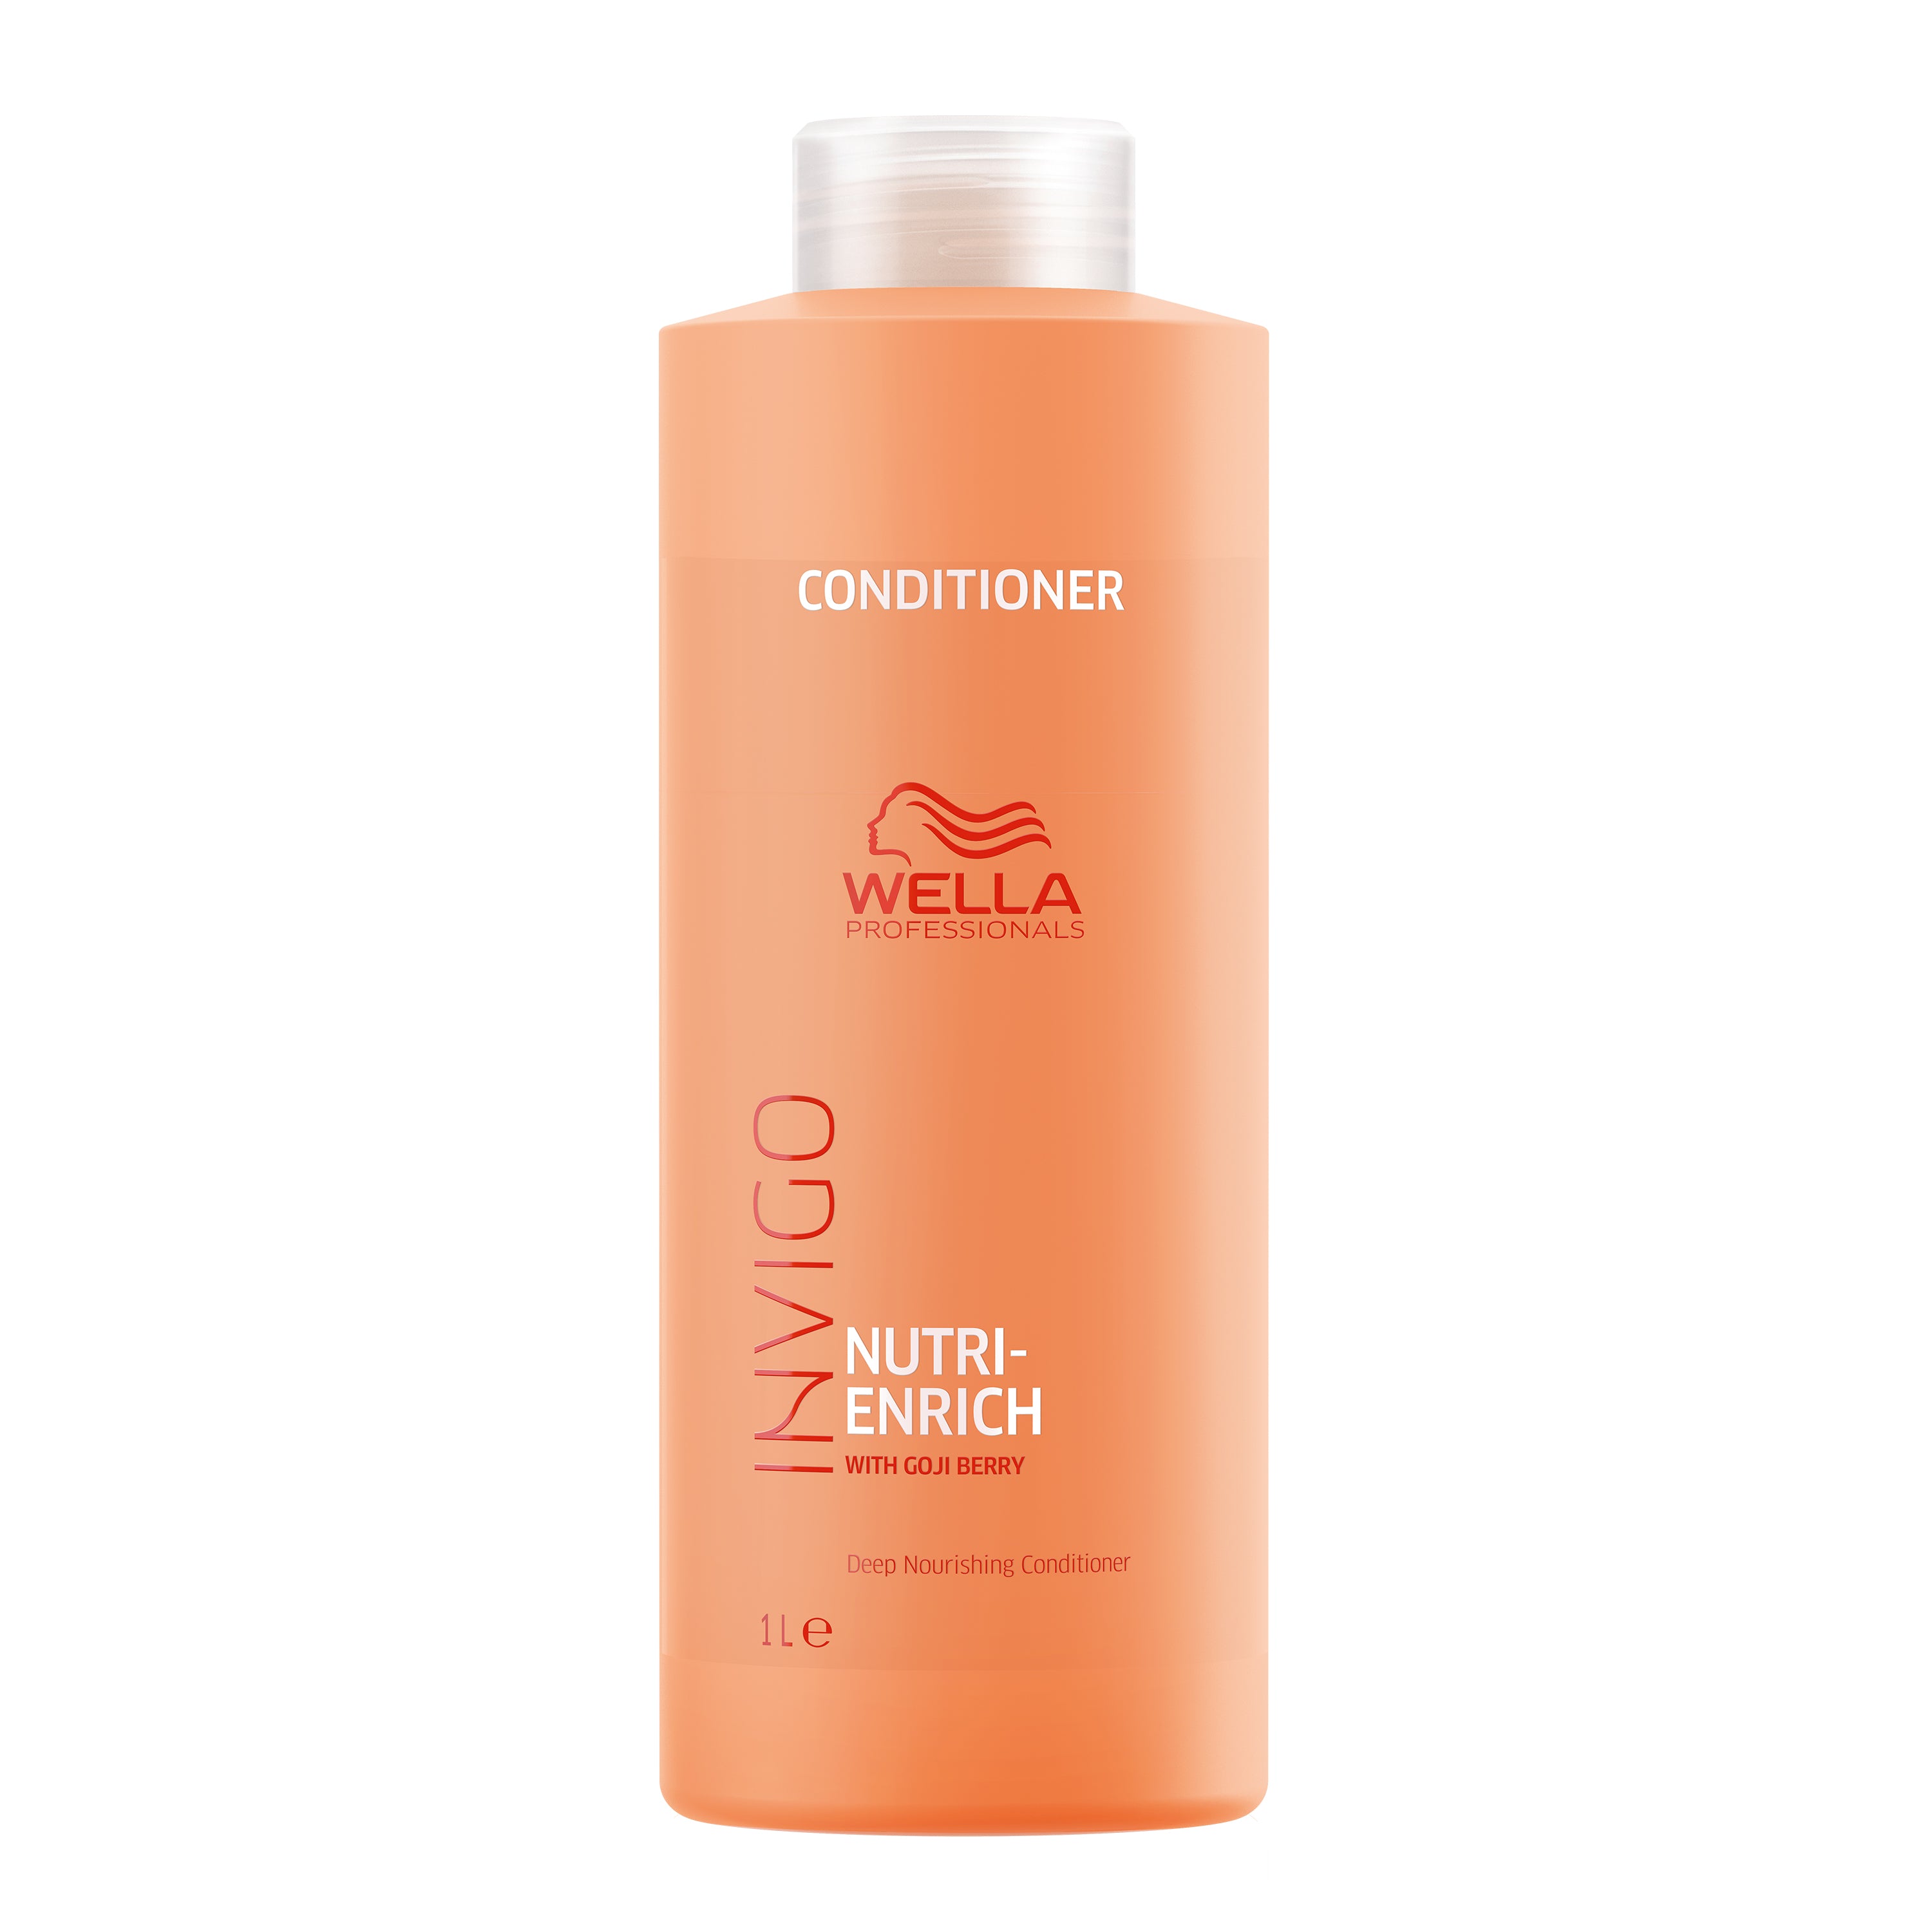 Wella Invigo Nutri-Enrich Shampoo & Conditioner 1 Litre Duo